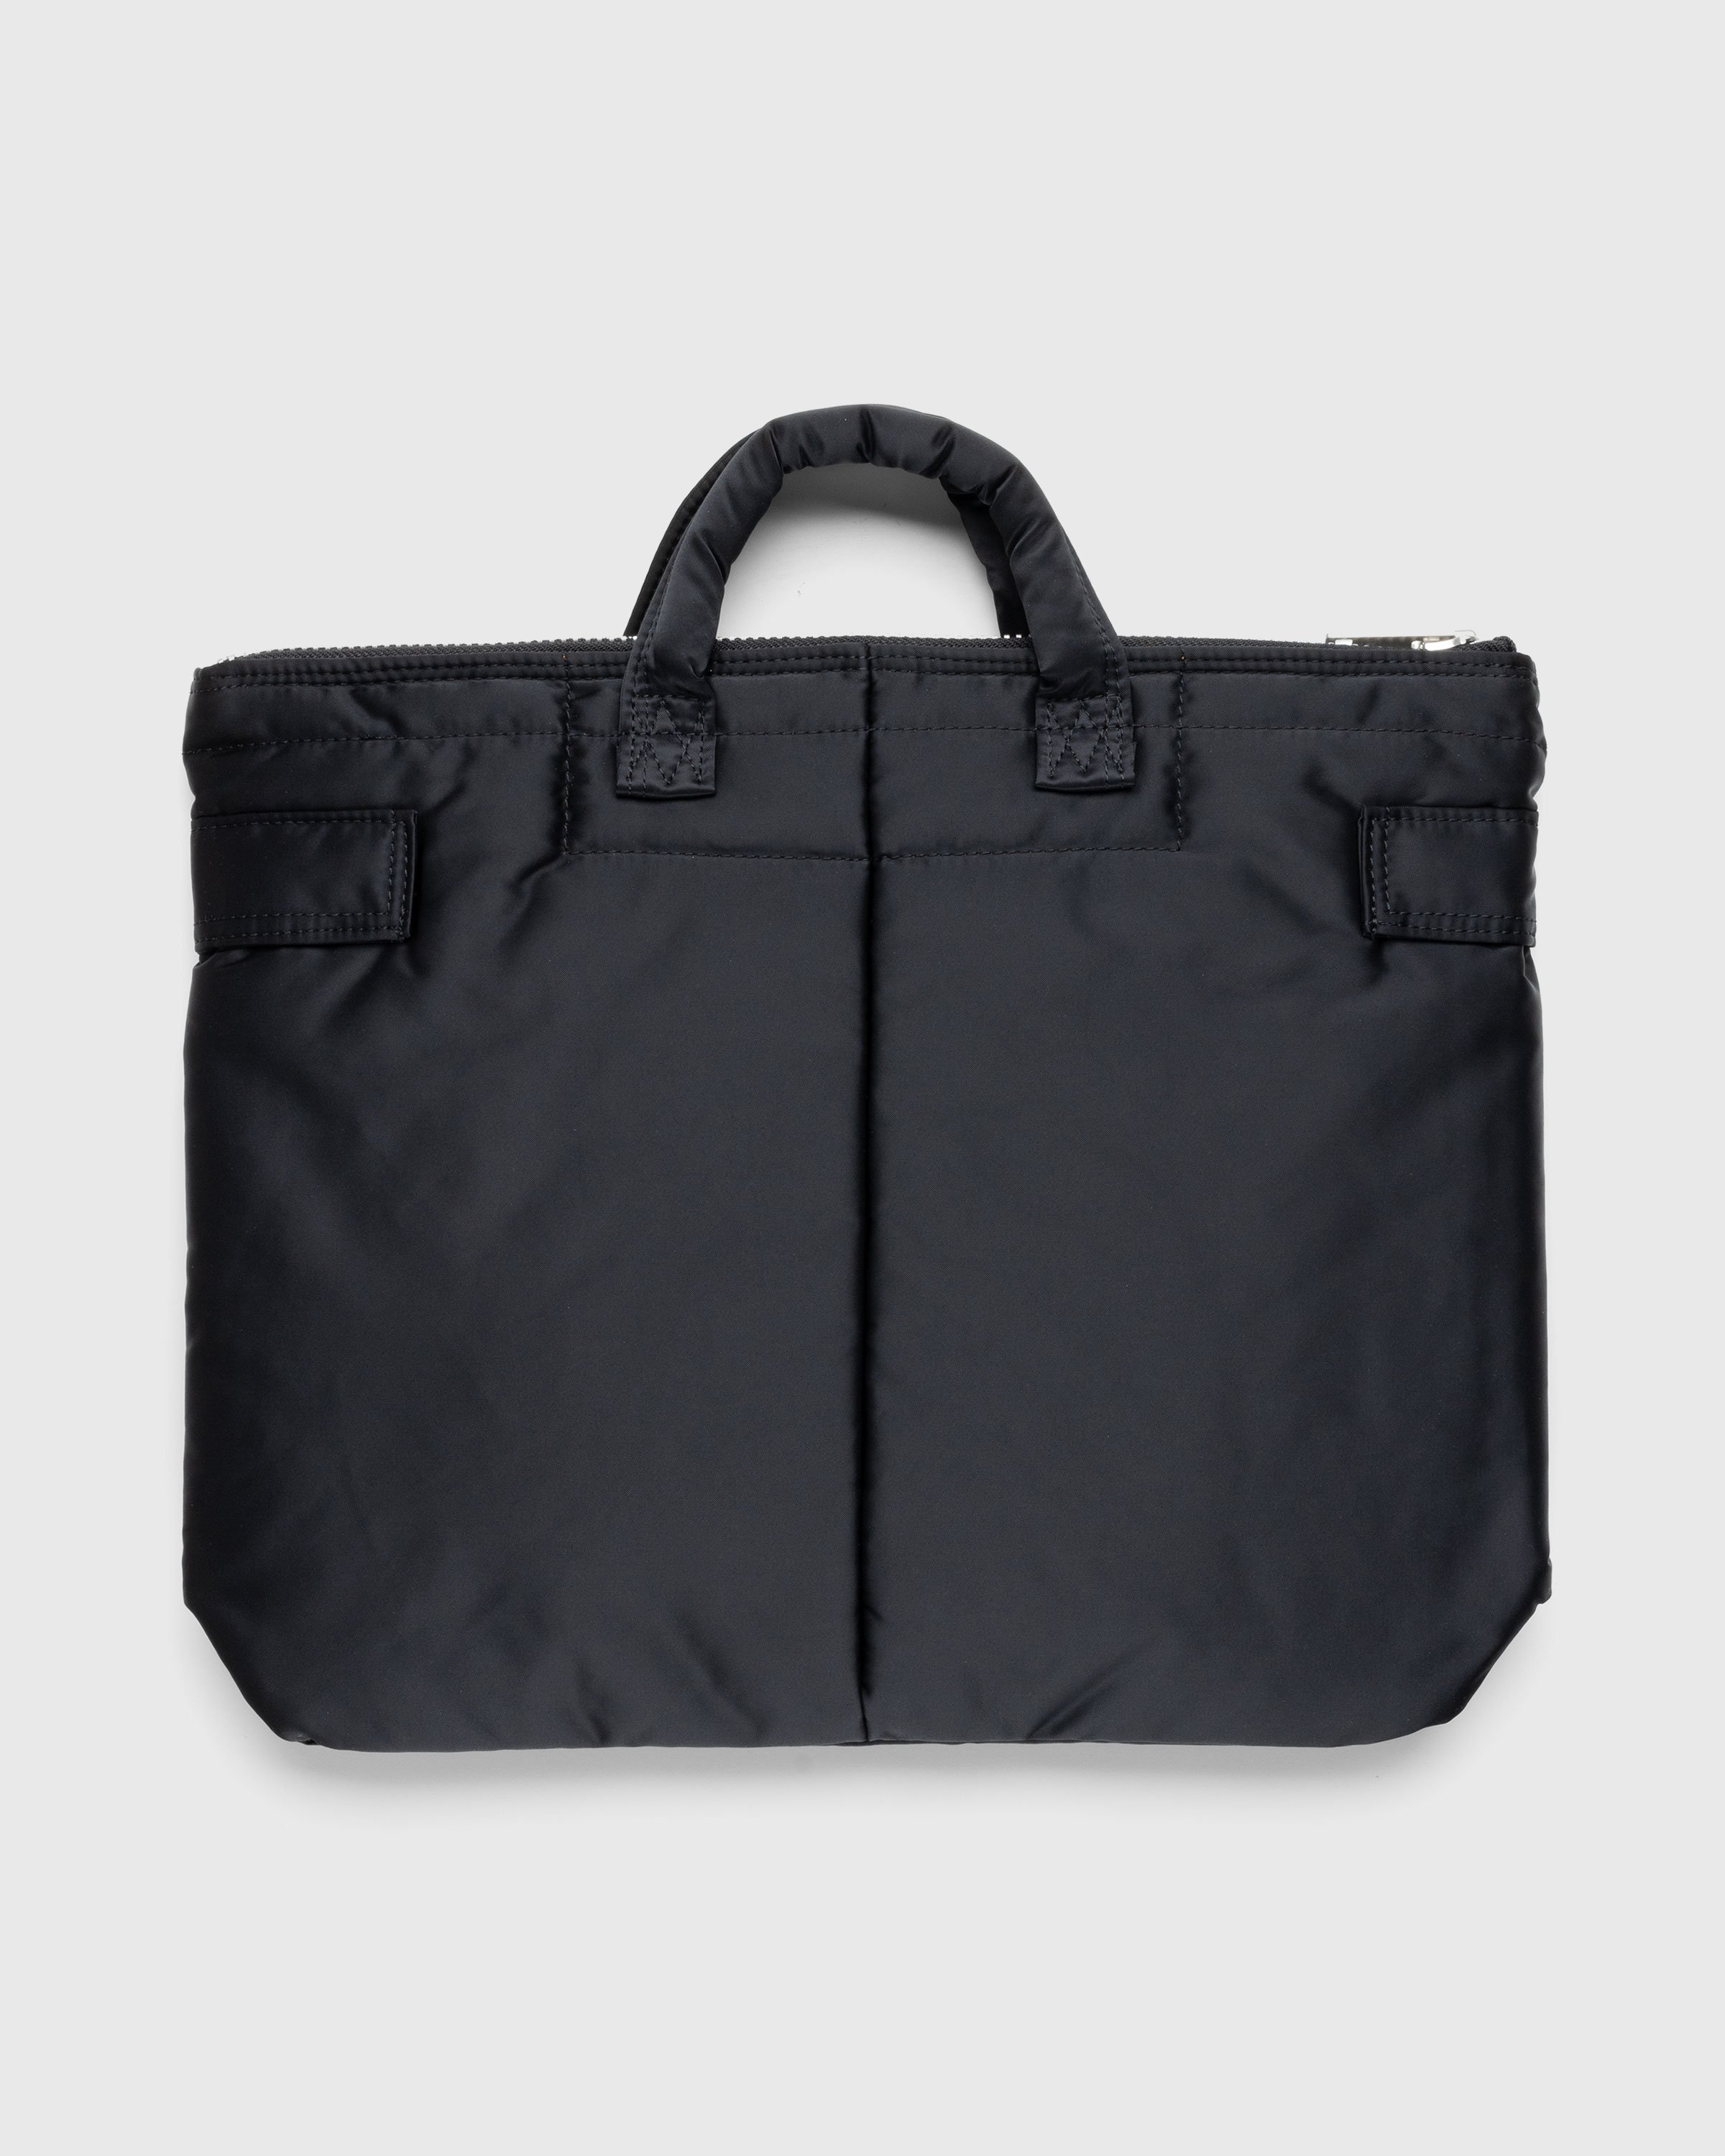 Porter-Yoshida & Co. - TANKER SHORT HELMET BAG (S) - Accessories - Black - Image 2